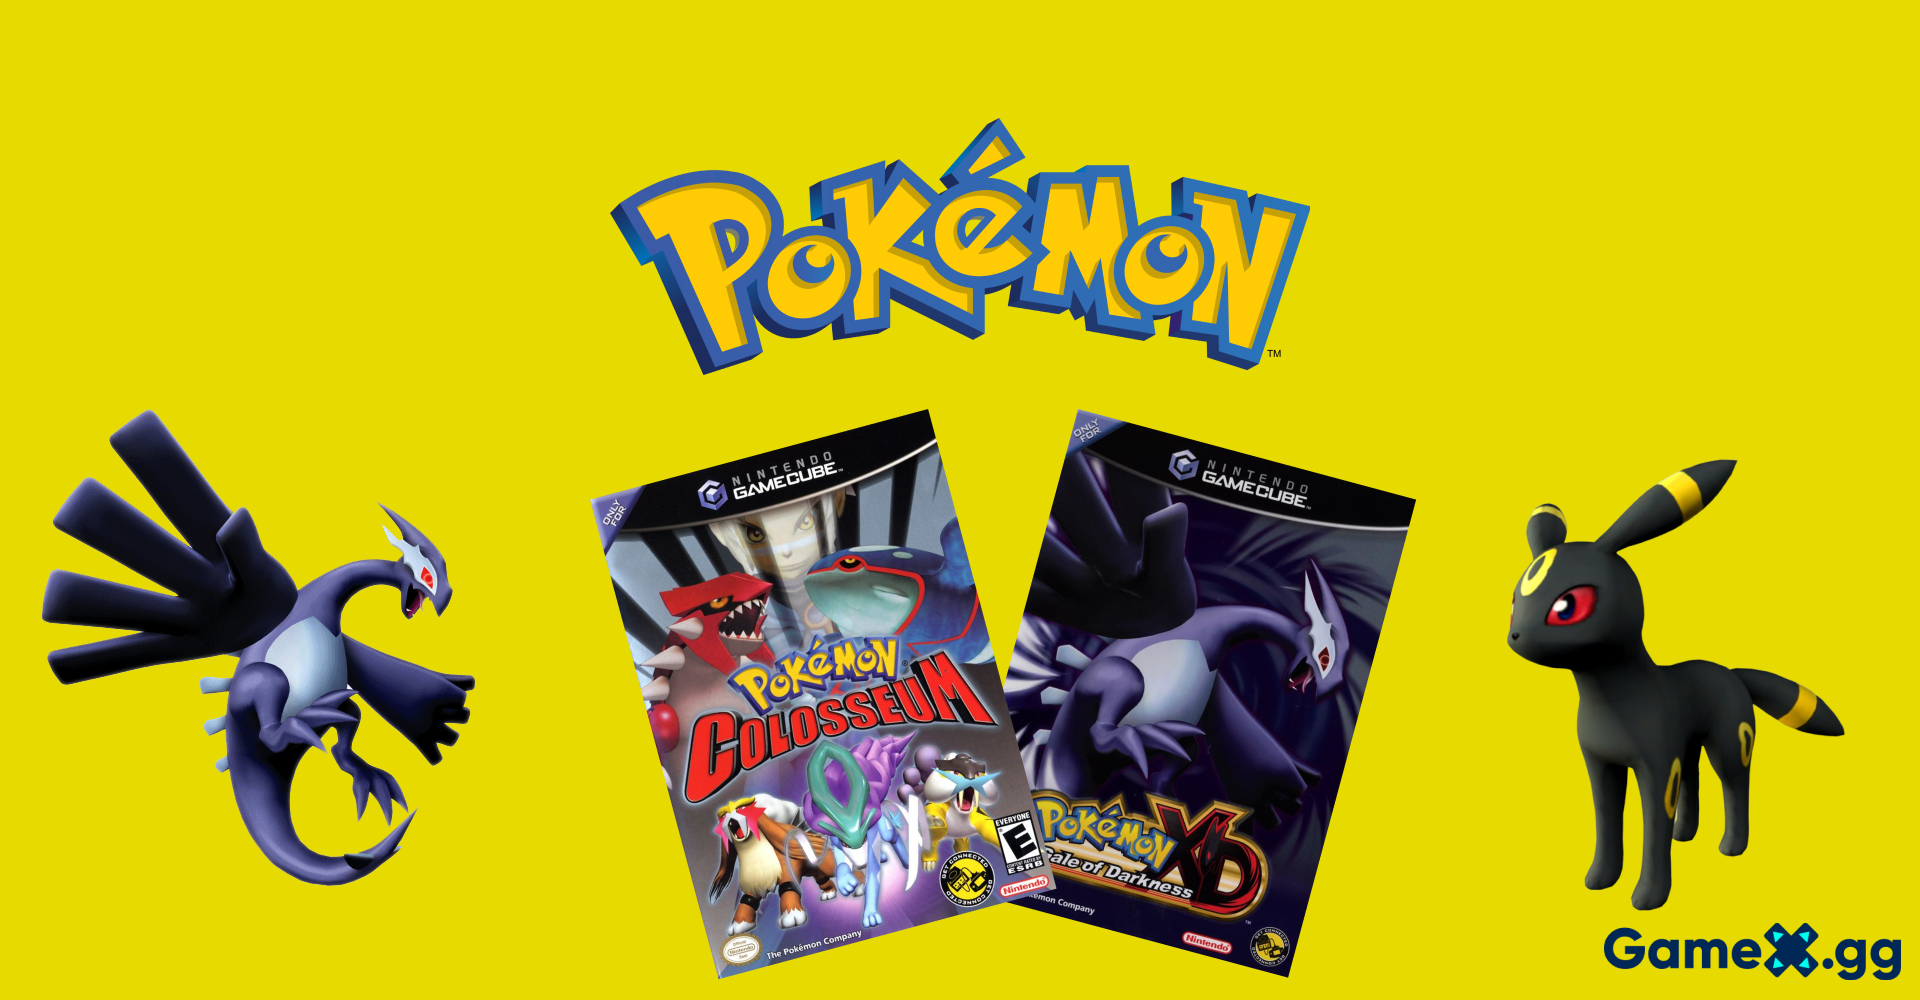 Most Valuable Pokemon Gamecube Games – 